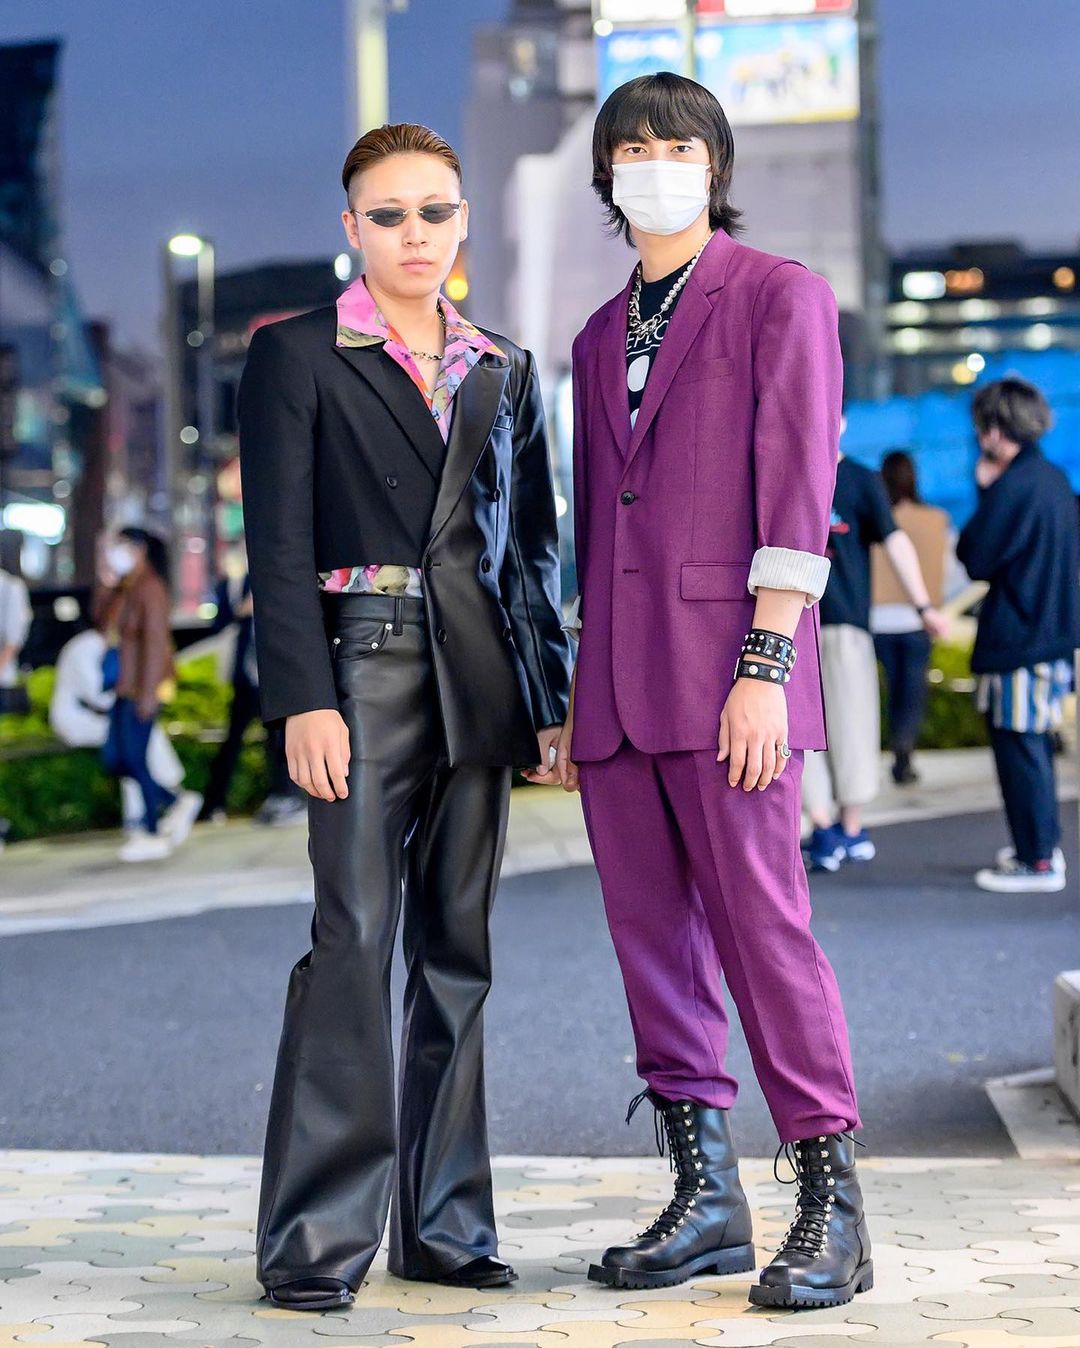 Tokyo Fashion: This week is Tokyo Fashion Week, and we're shooting ...